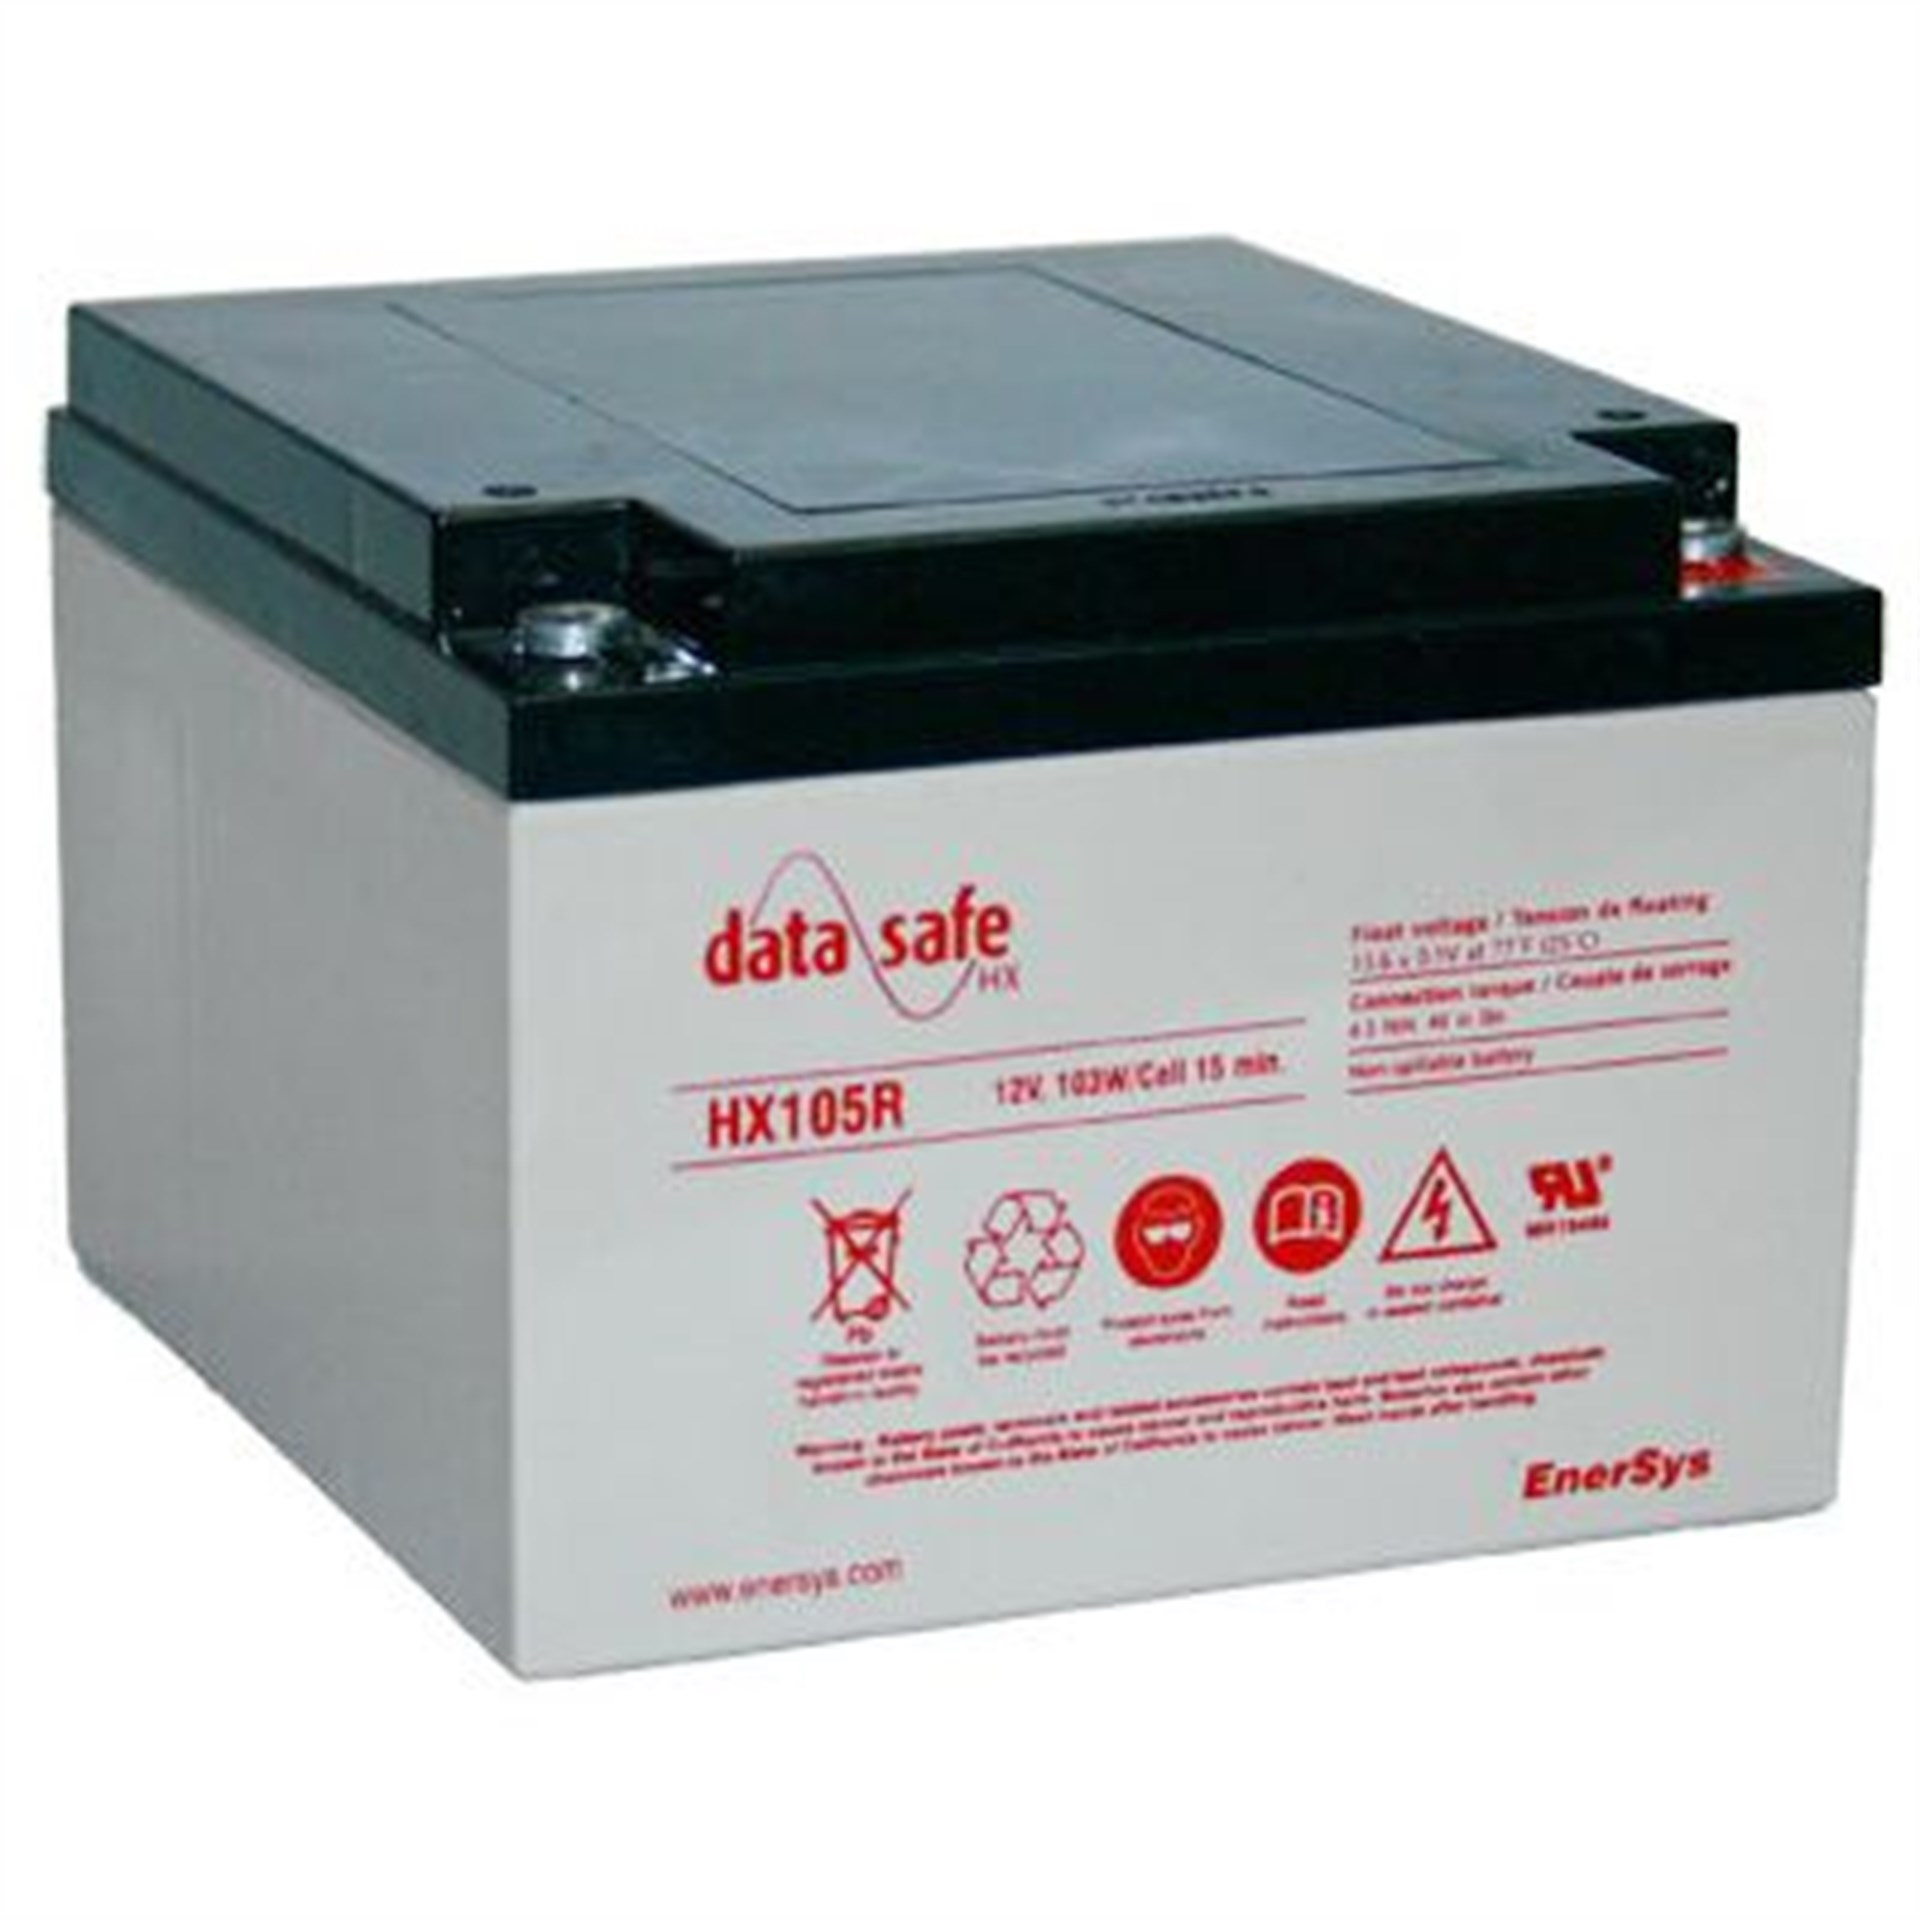 Enersys DataSafe 12HX105